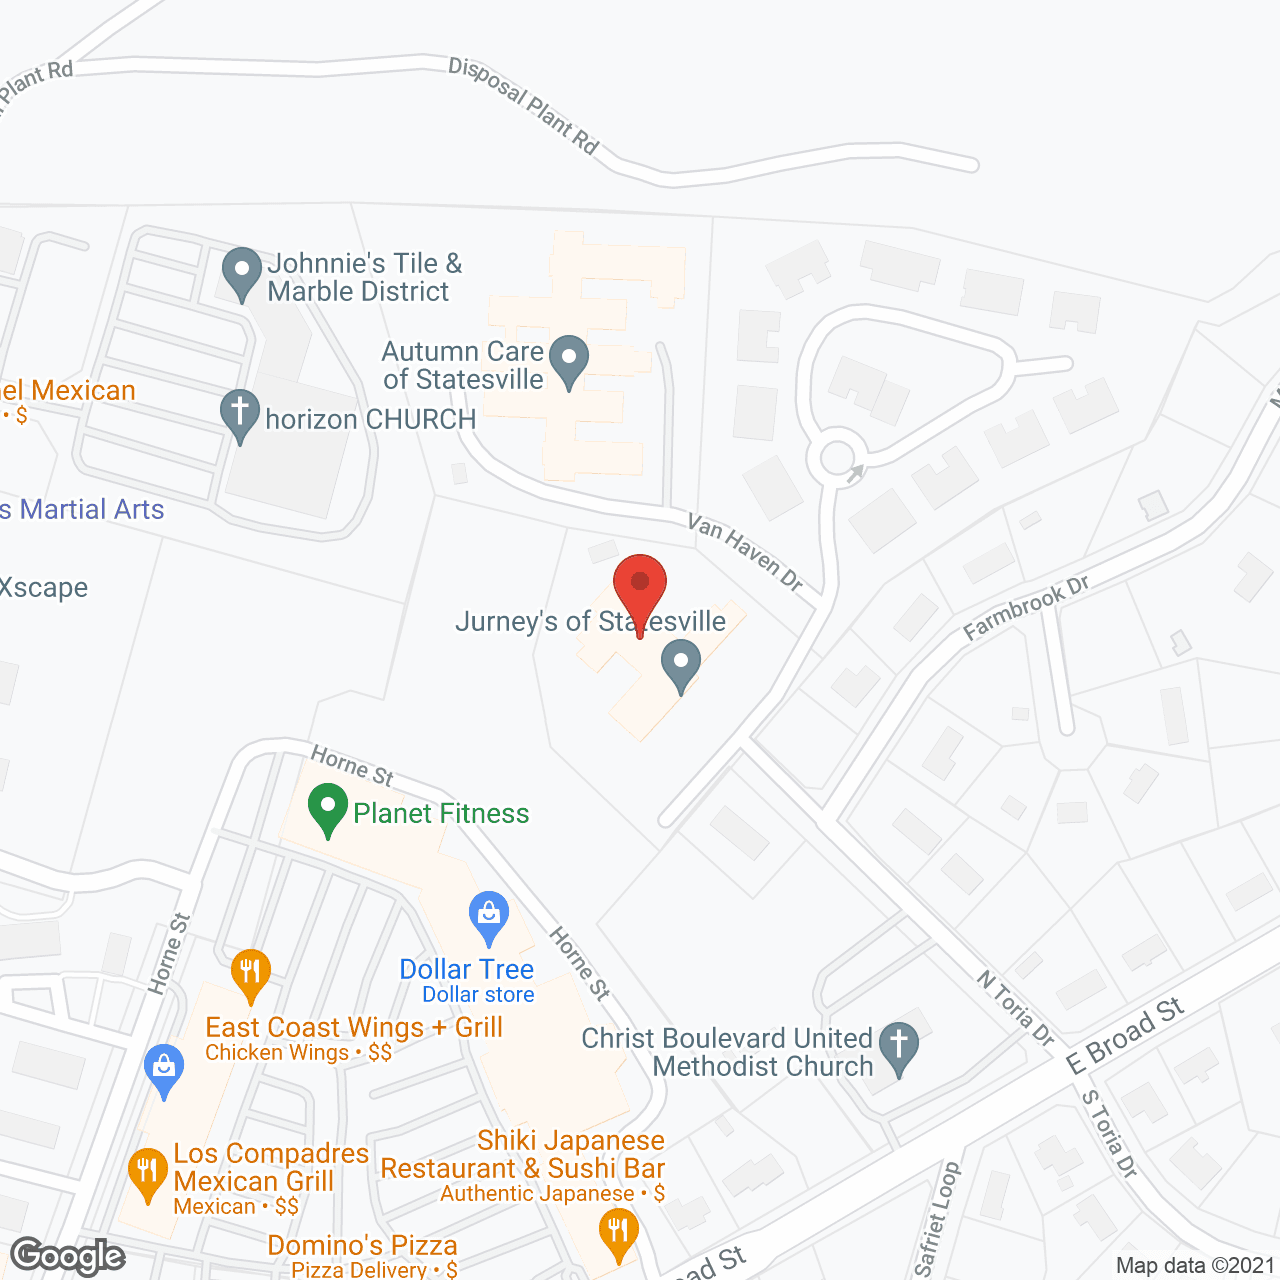 Jurney's of Statesville in google map